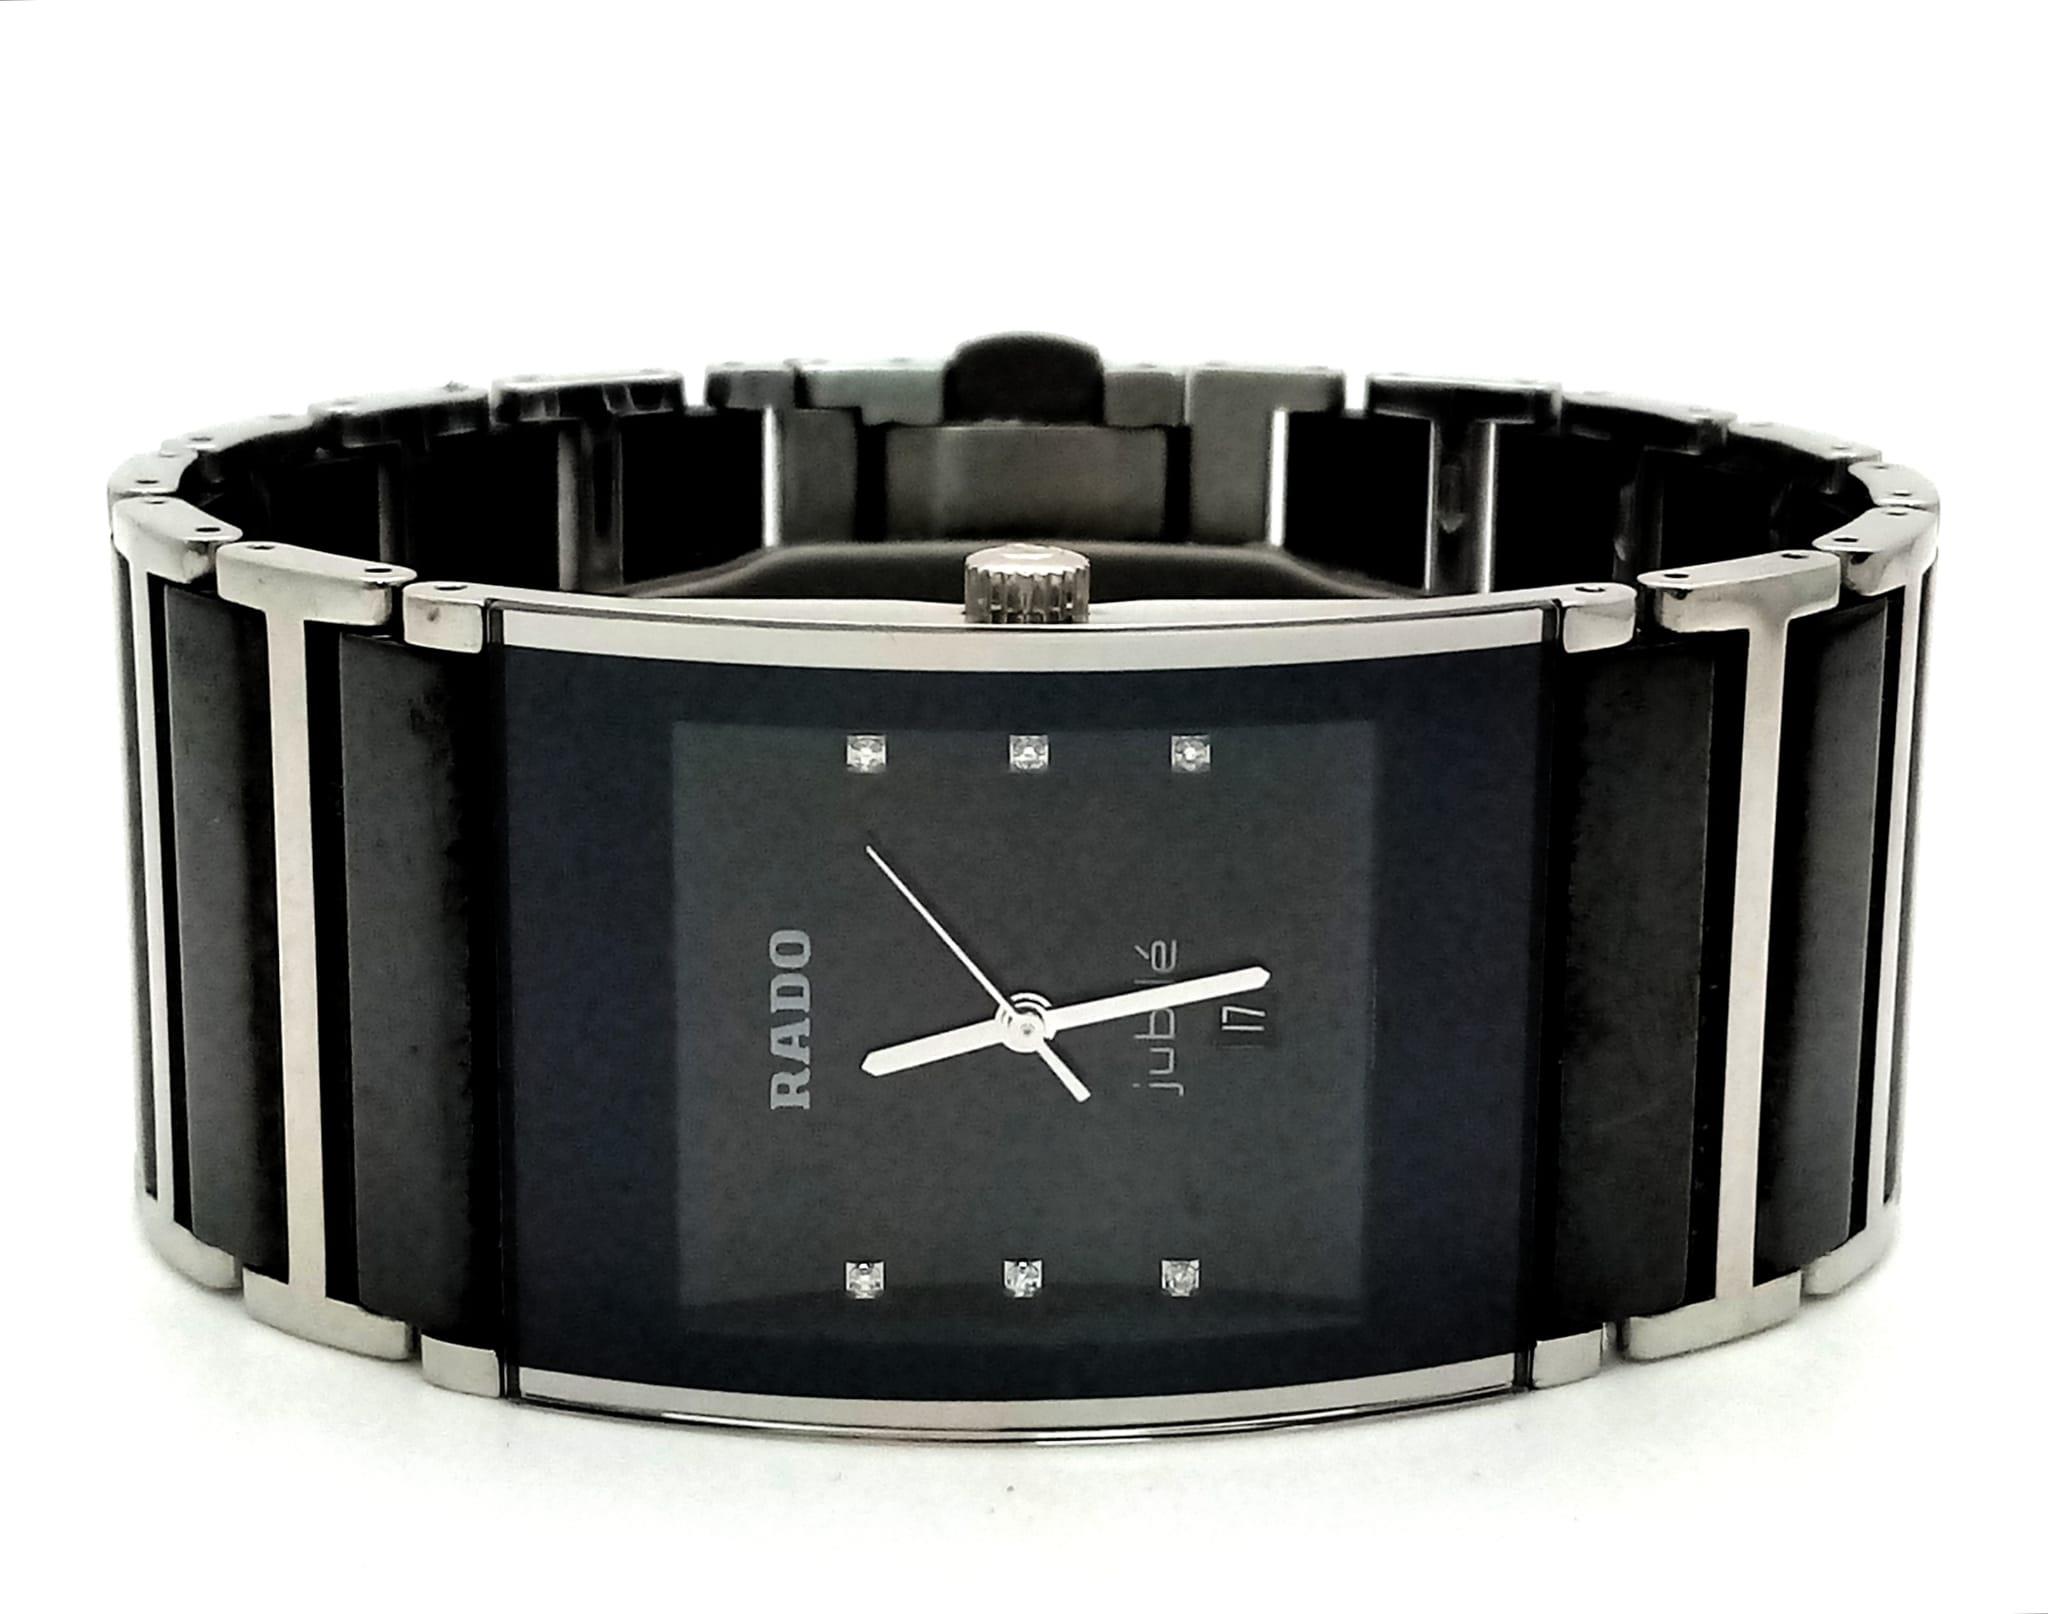 A Rado Diastar Jubile Quartz Unisex Watch. Stainless steel, ceramic bracelet and rectangular